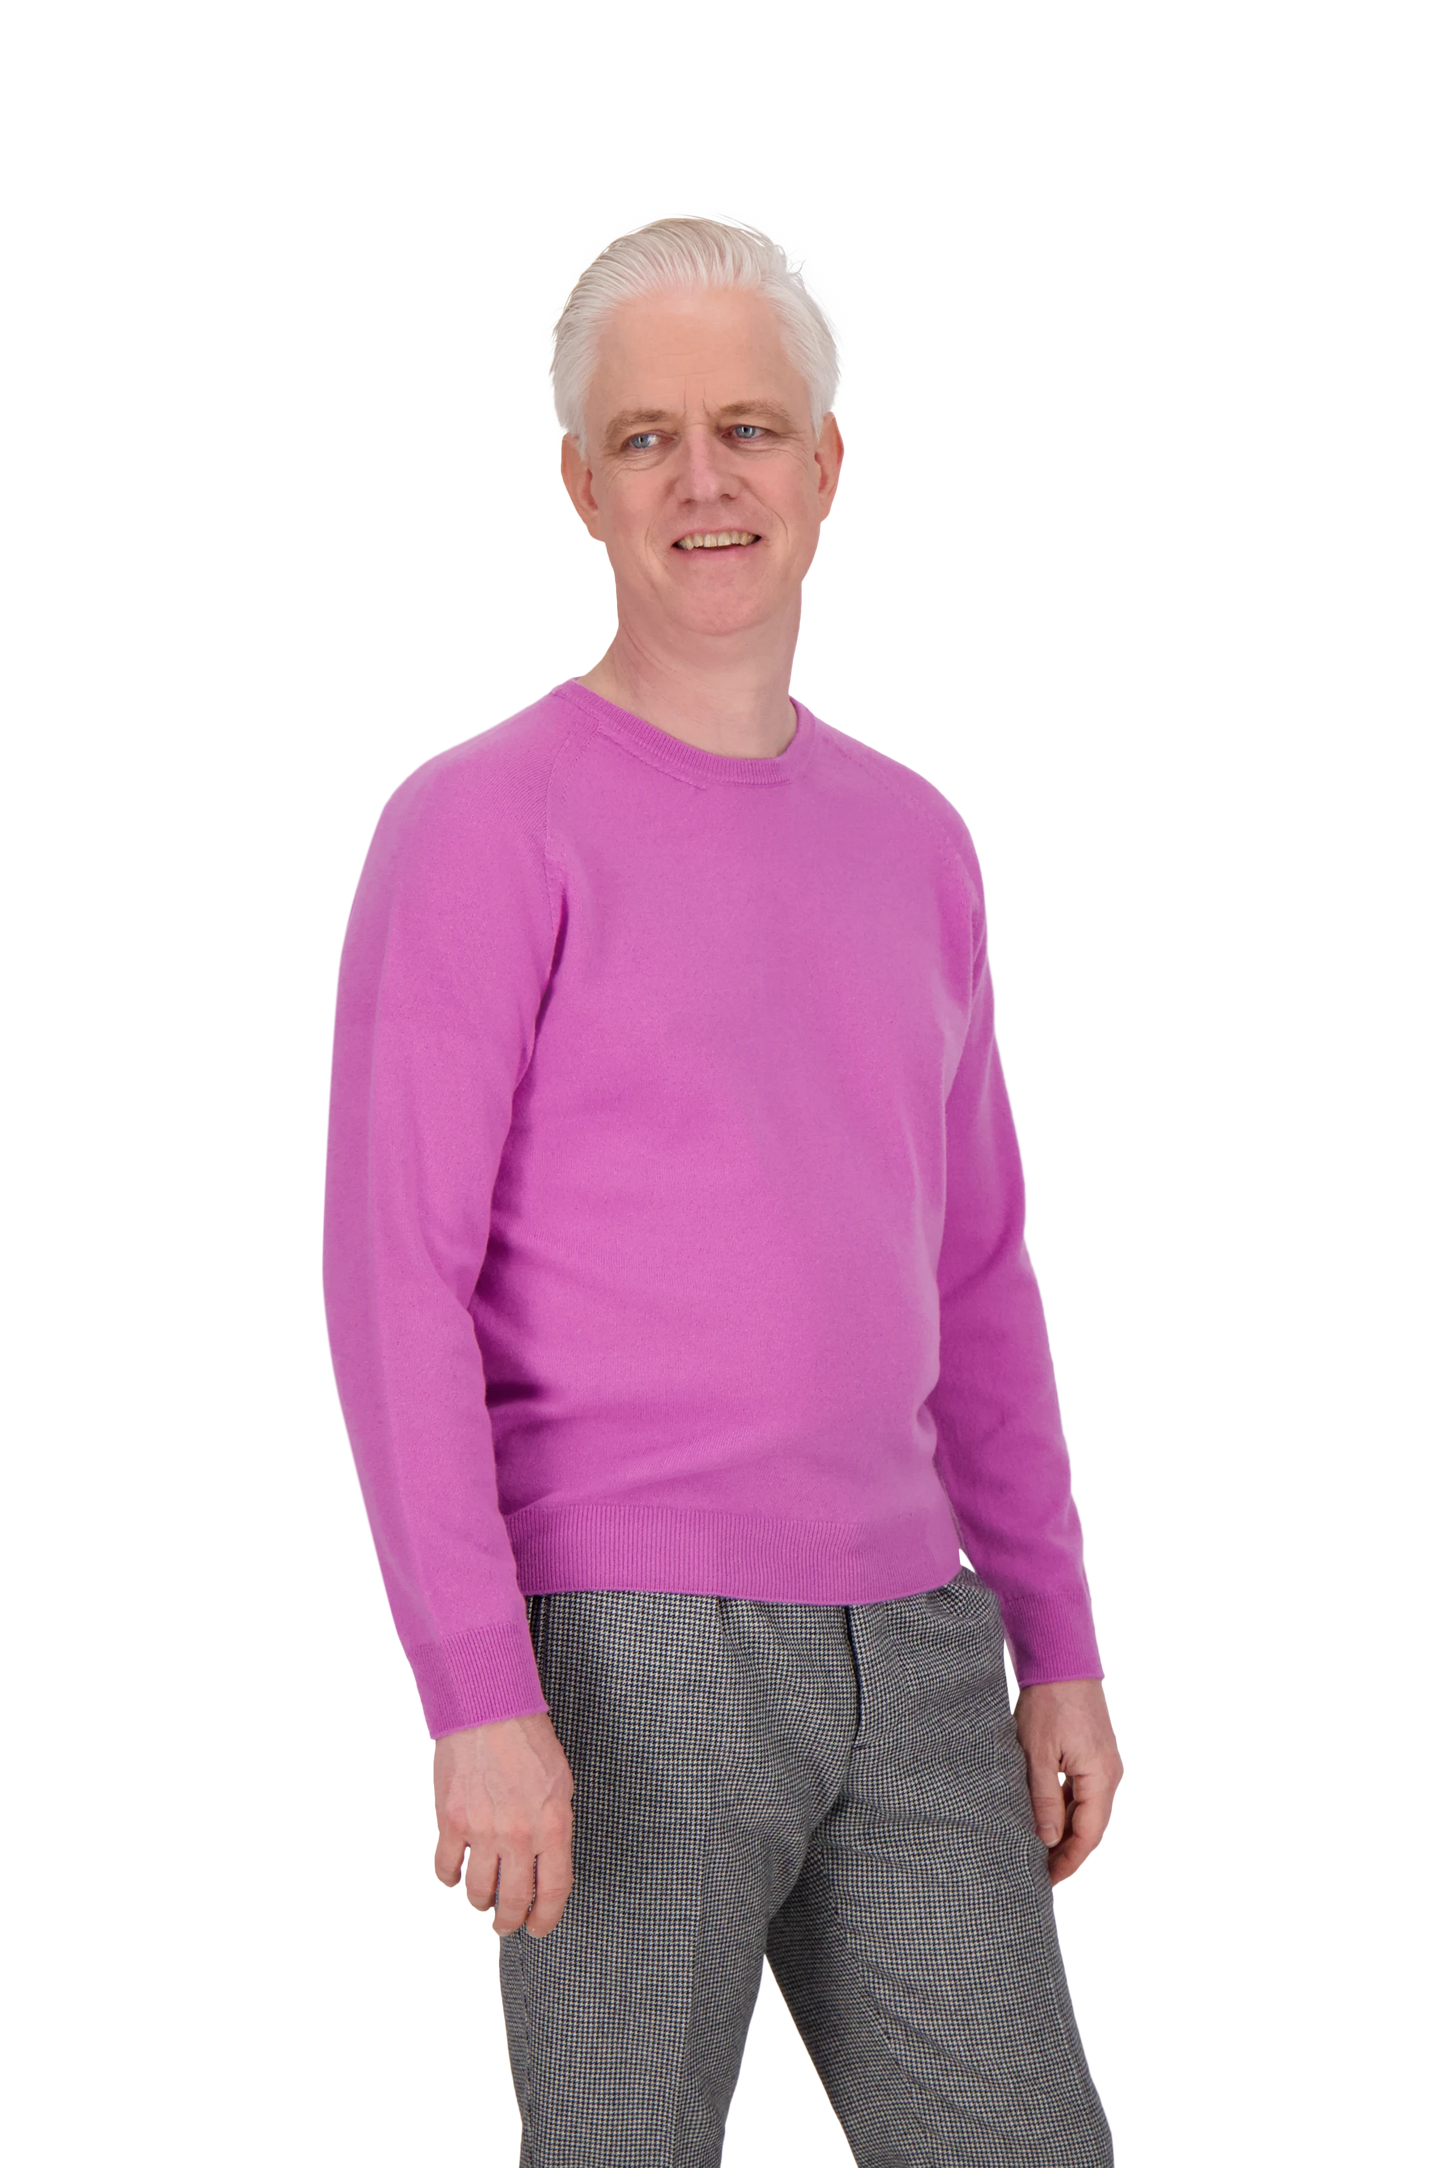 Knitwear Auckland lilac Raglan Crew neck Cashmere